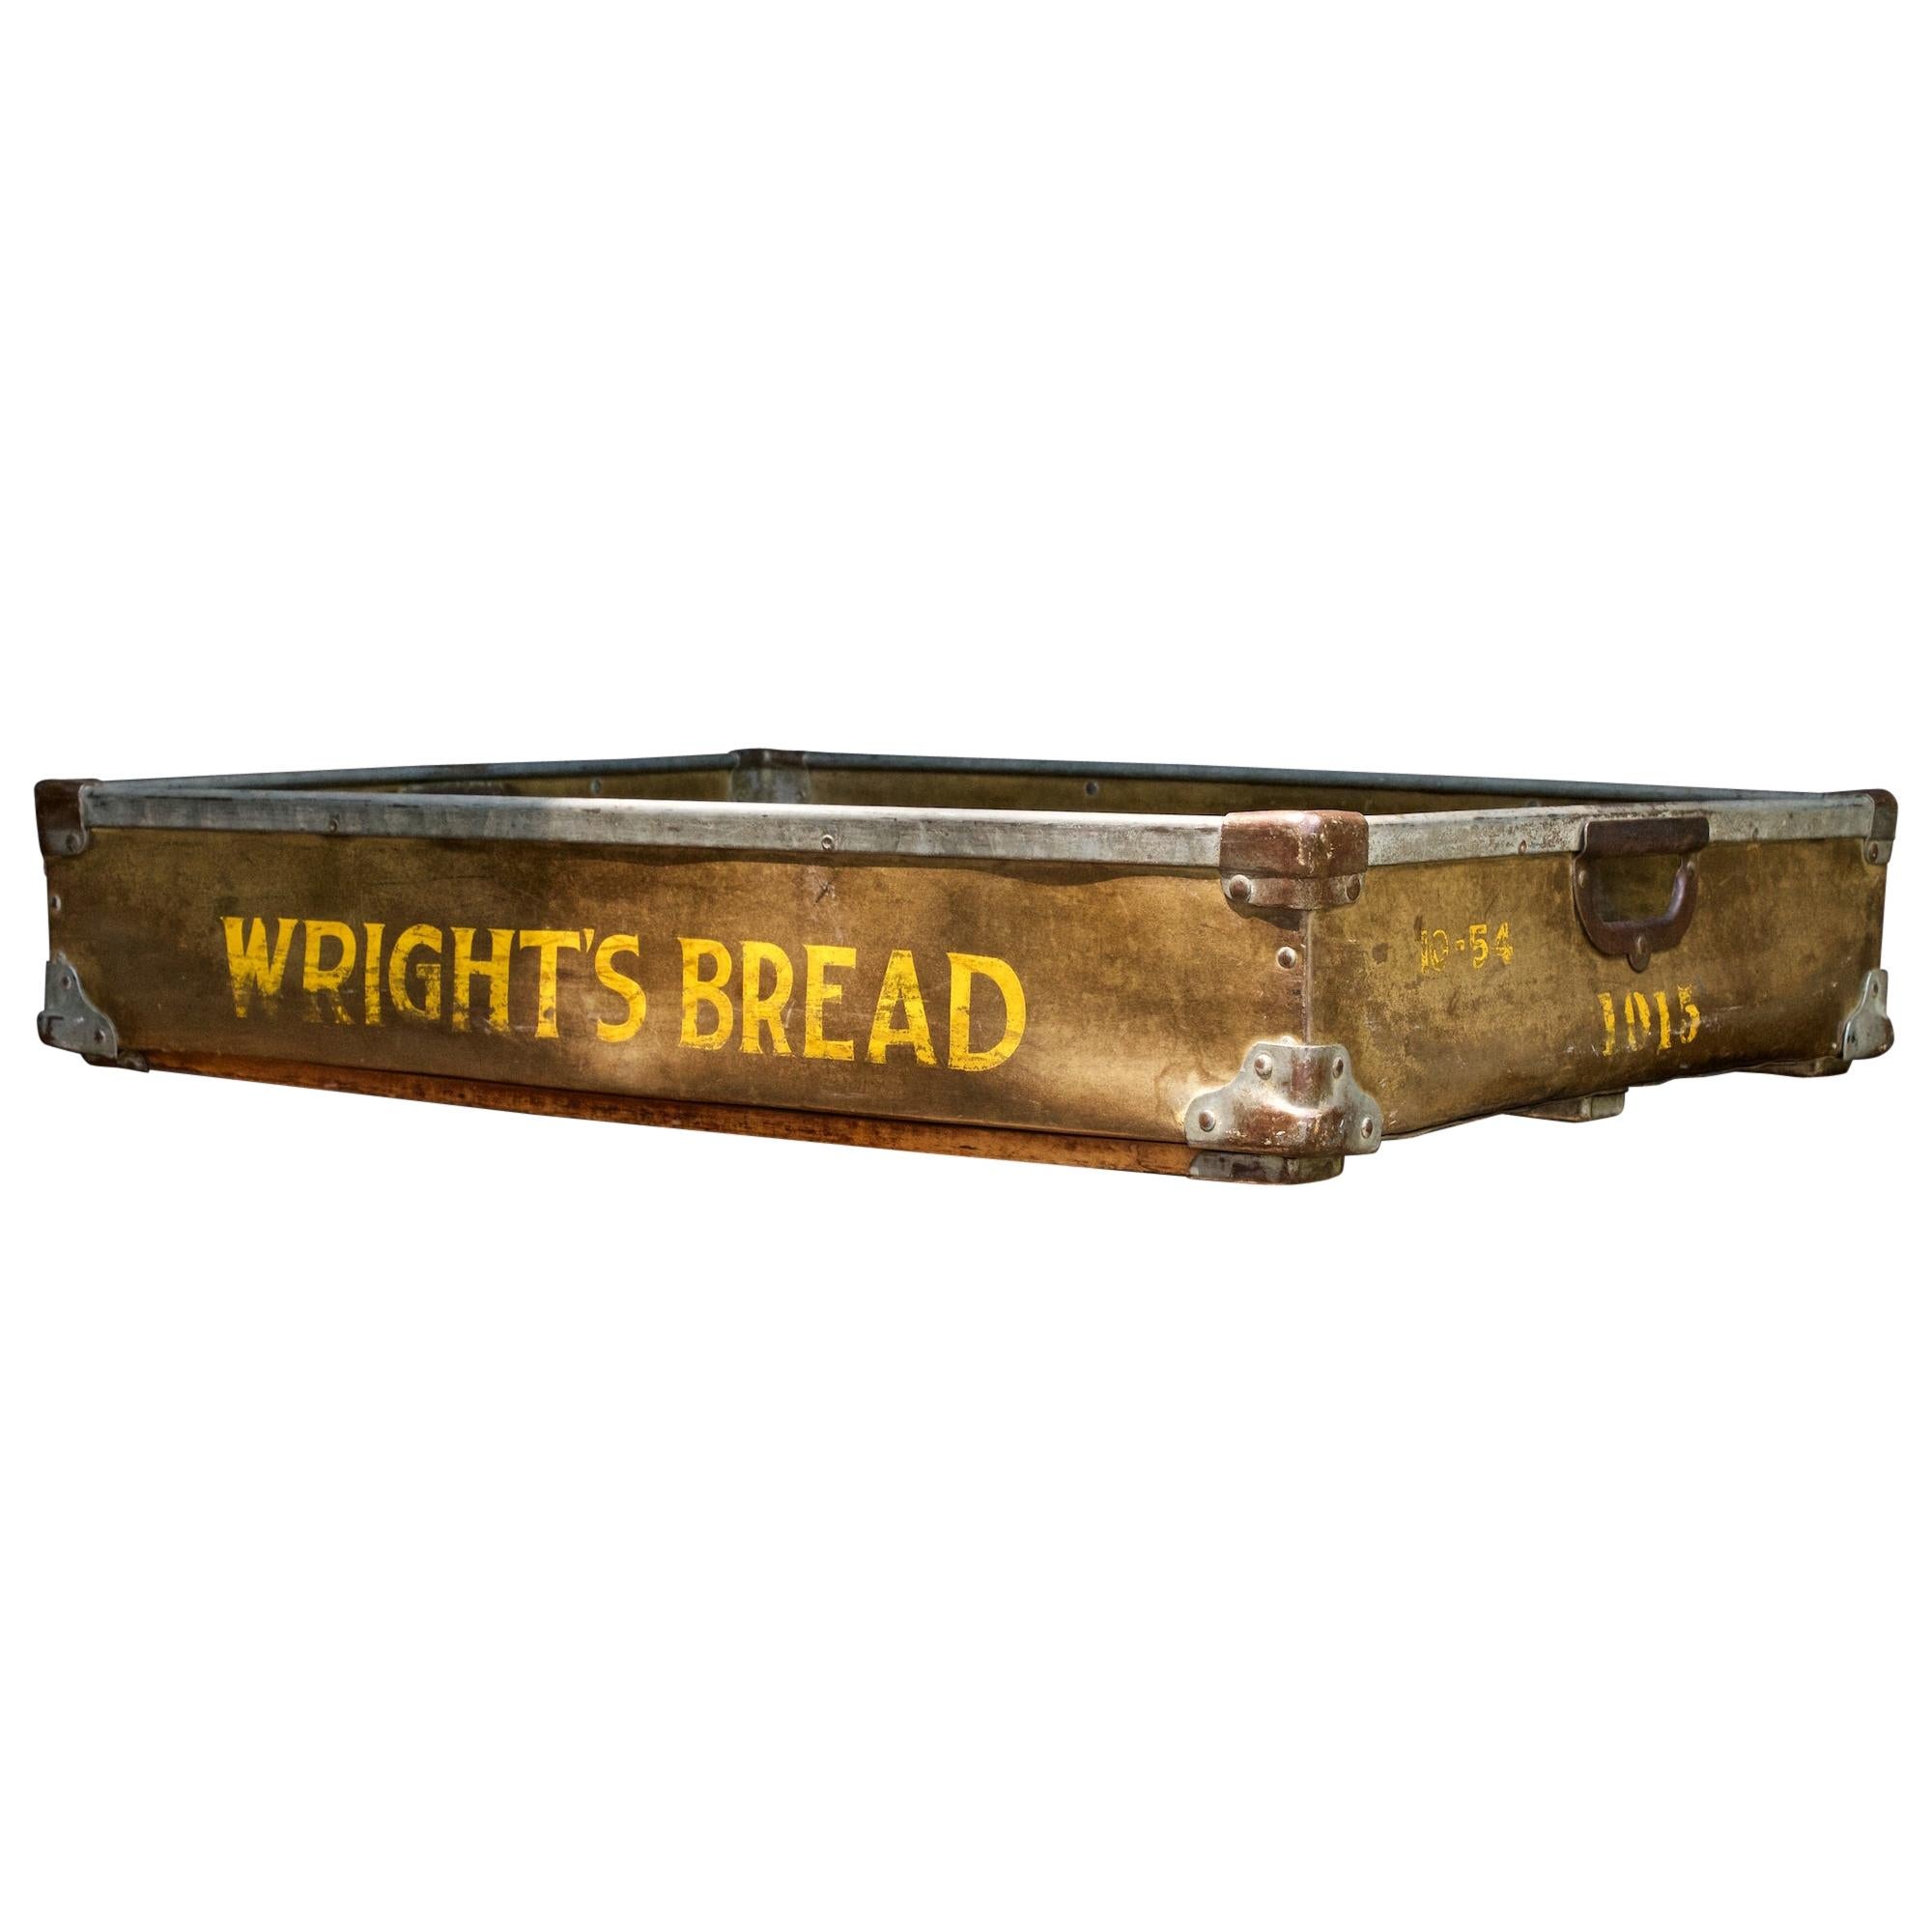 Wrights Bread Crate Vintage Industrielle Vulcanized Display Box Korb Tablett, 1950er Jahre